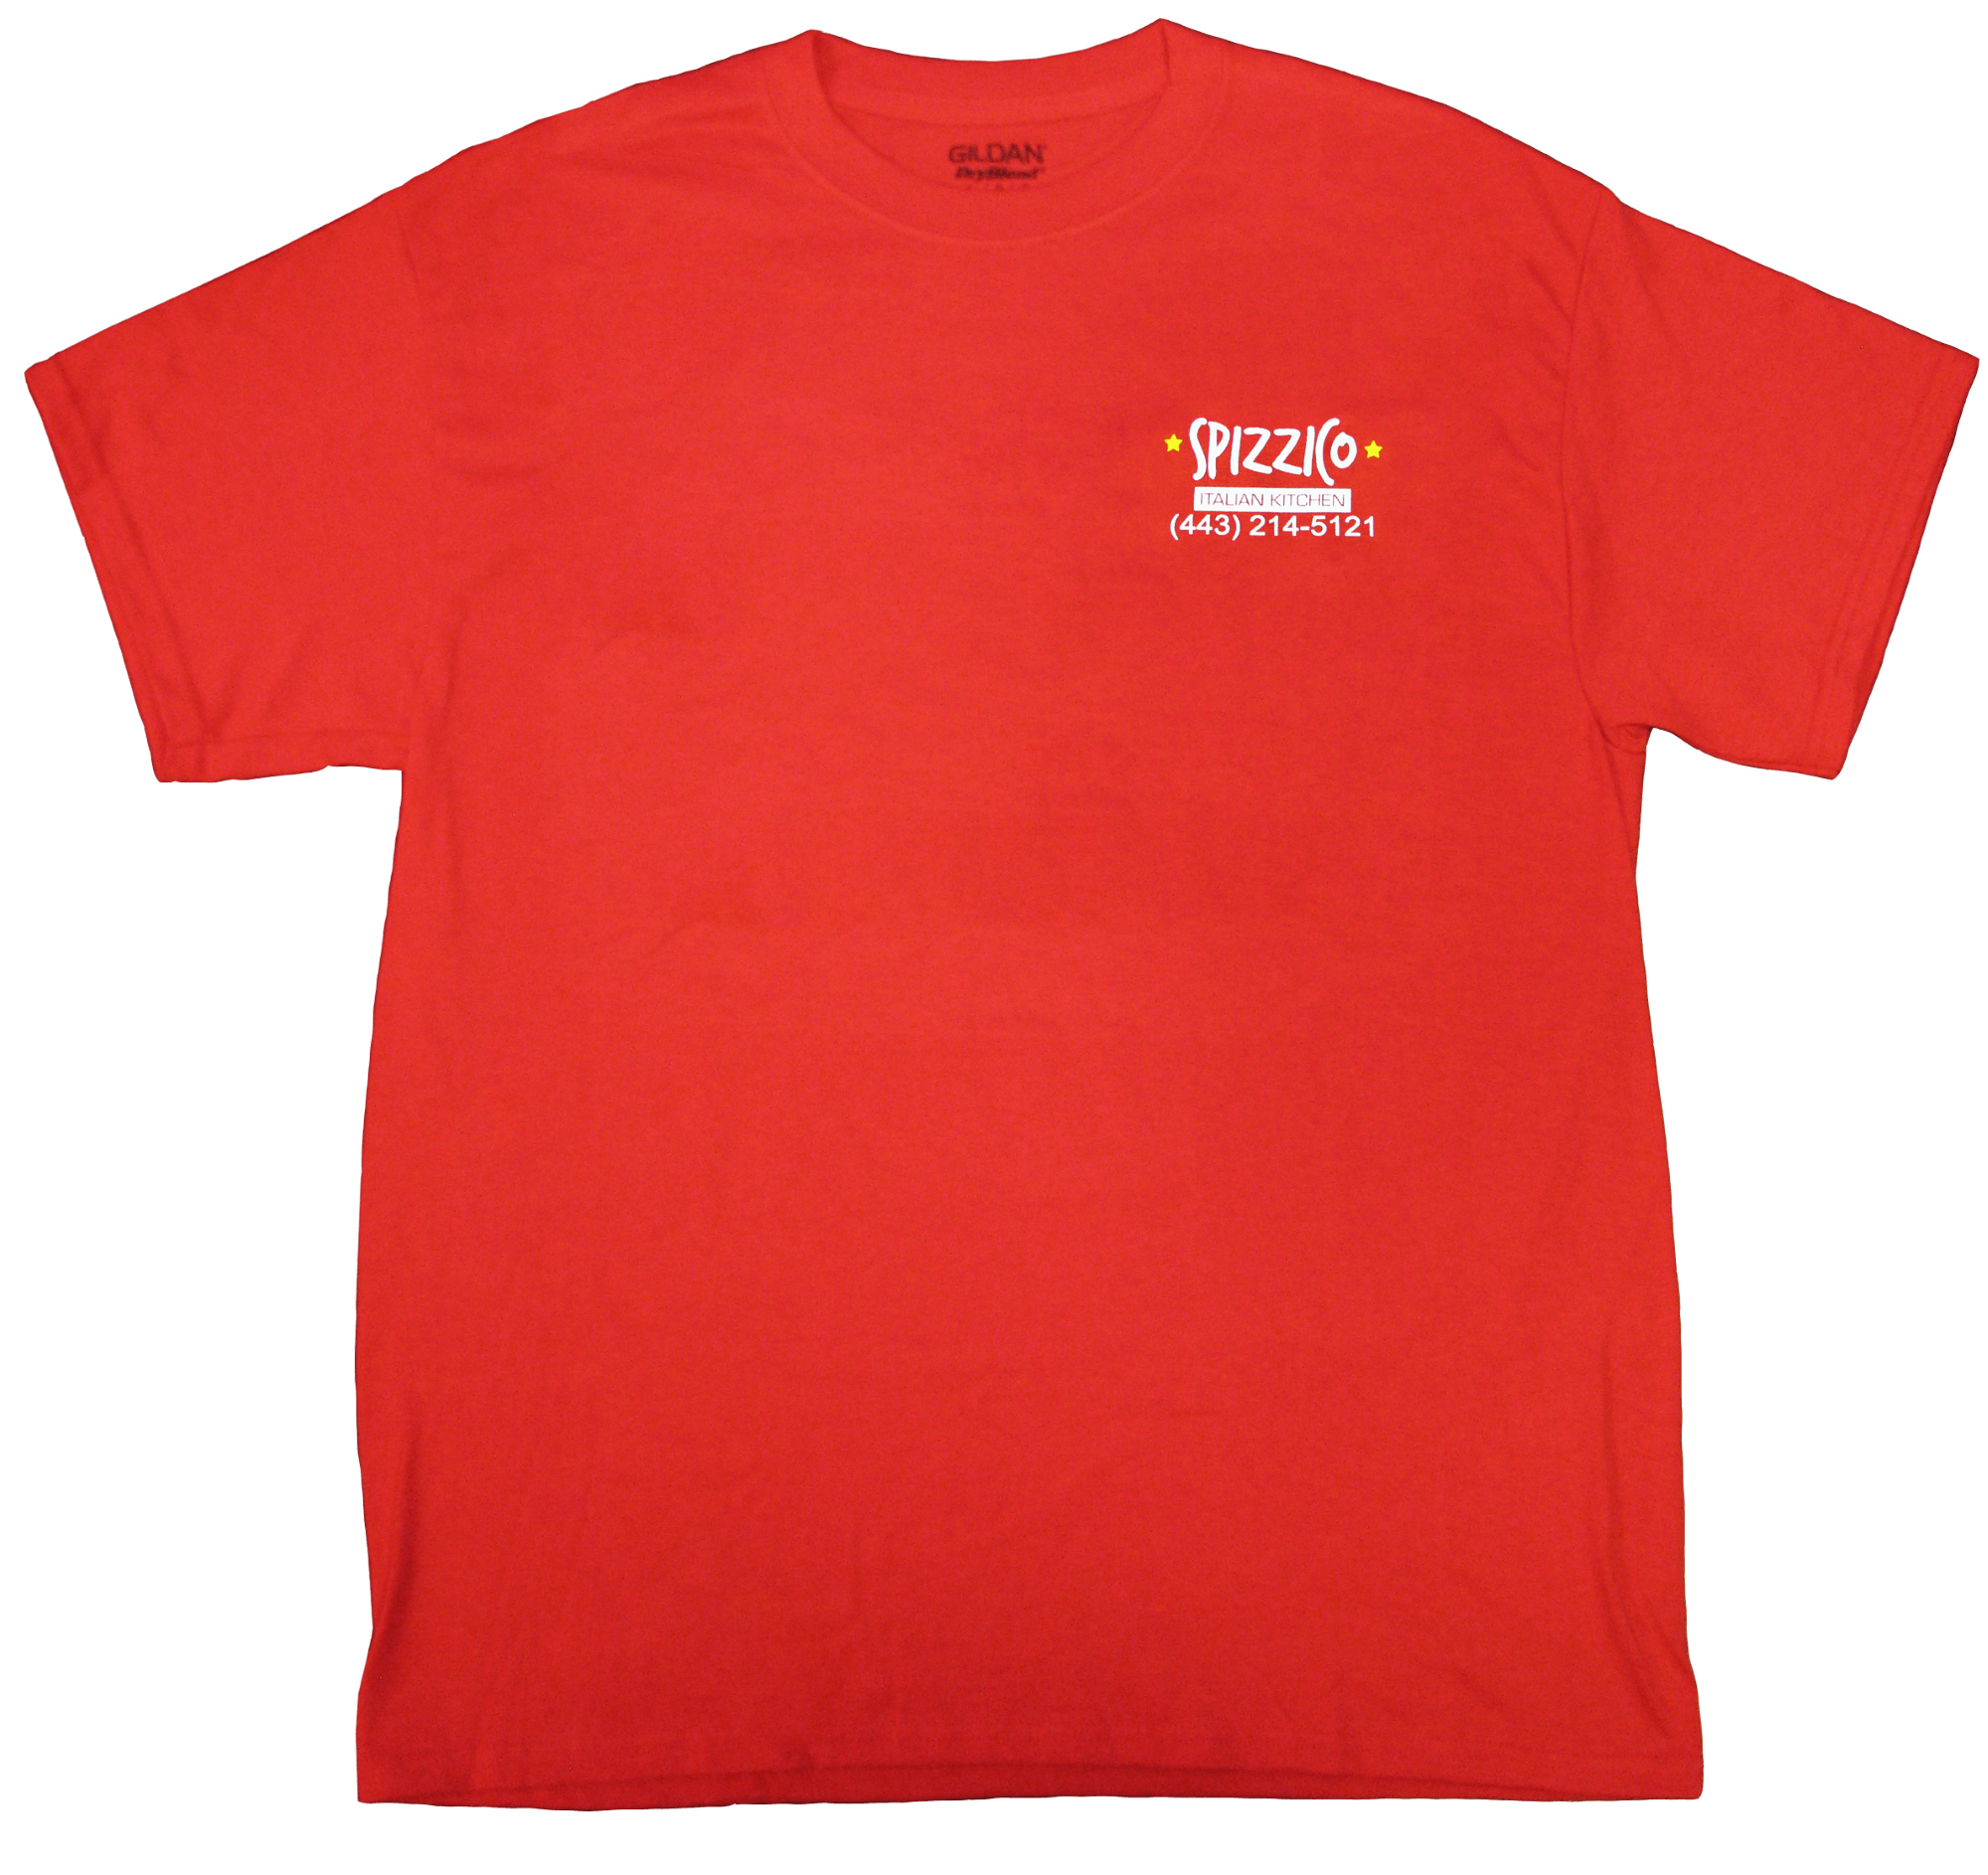 Spizzico T-Shirt - Front